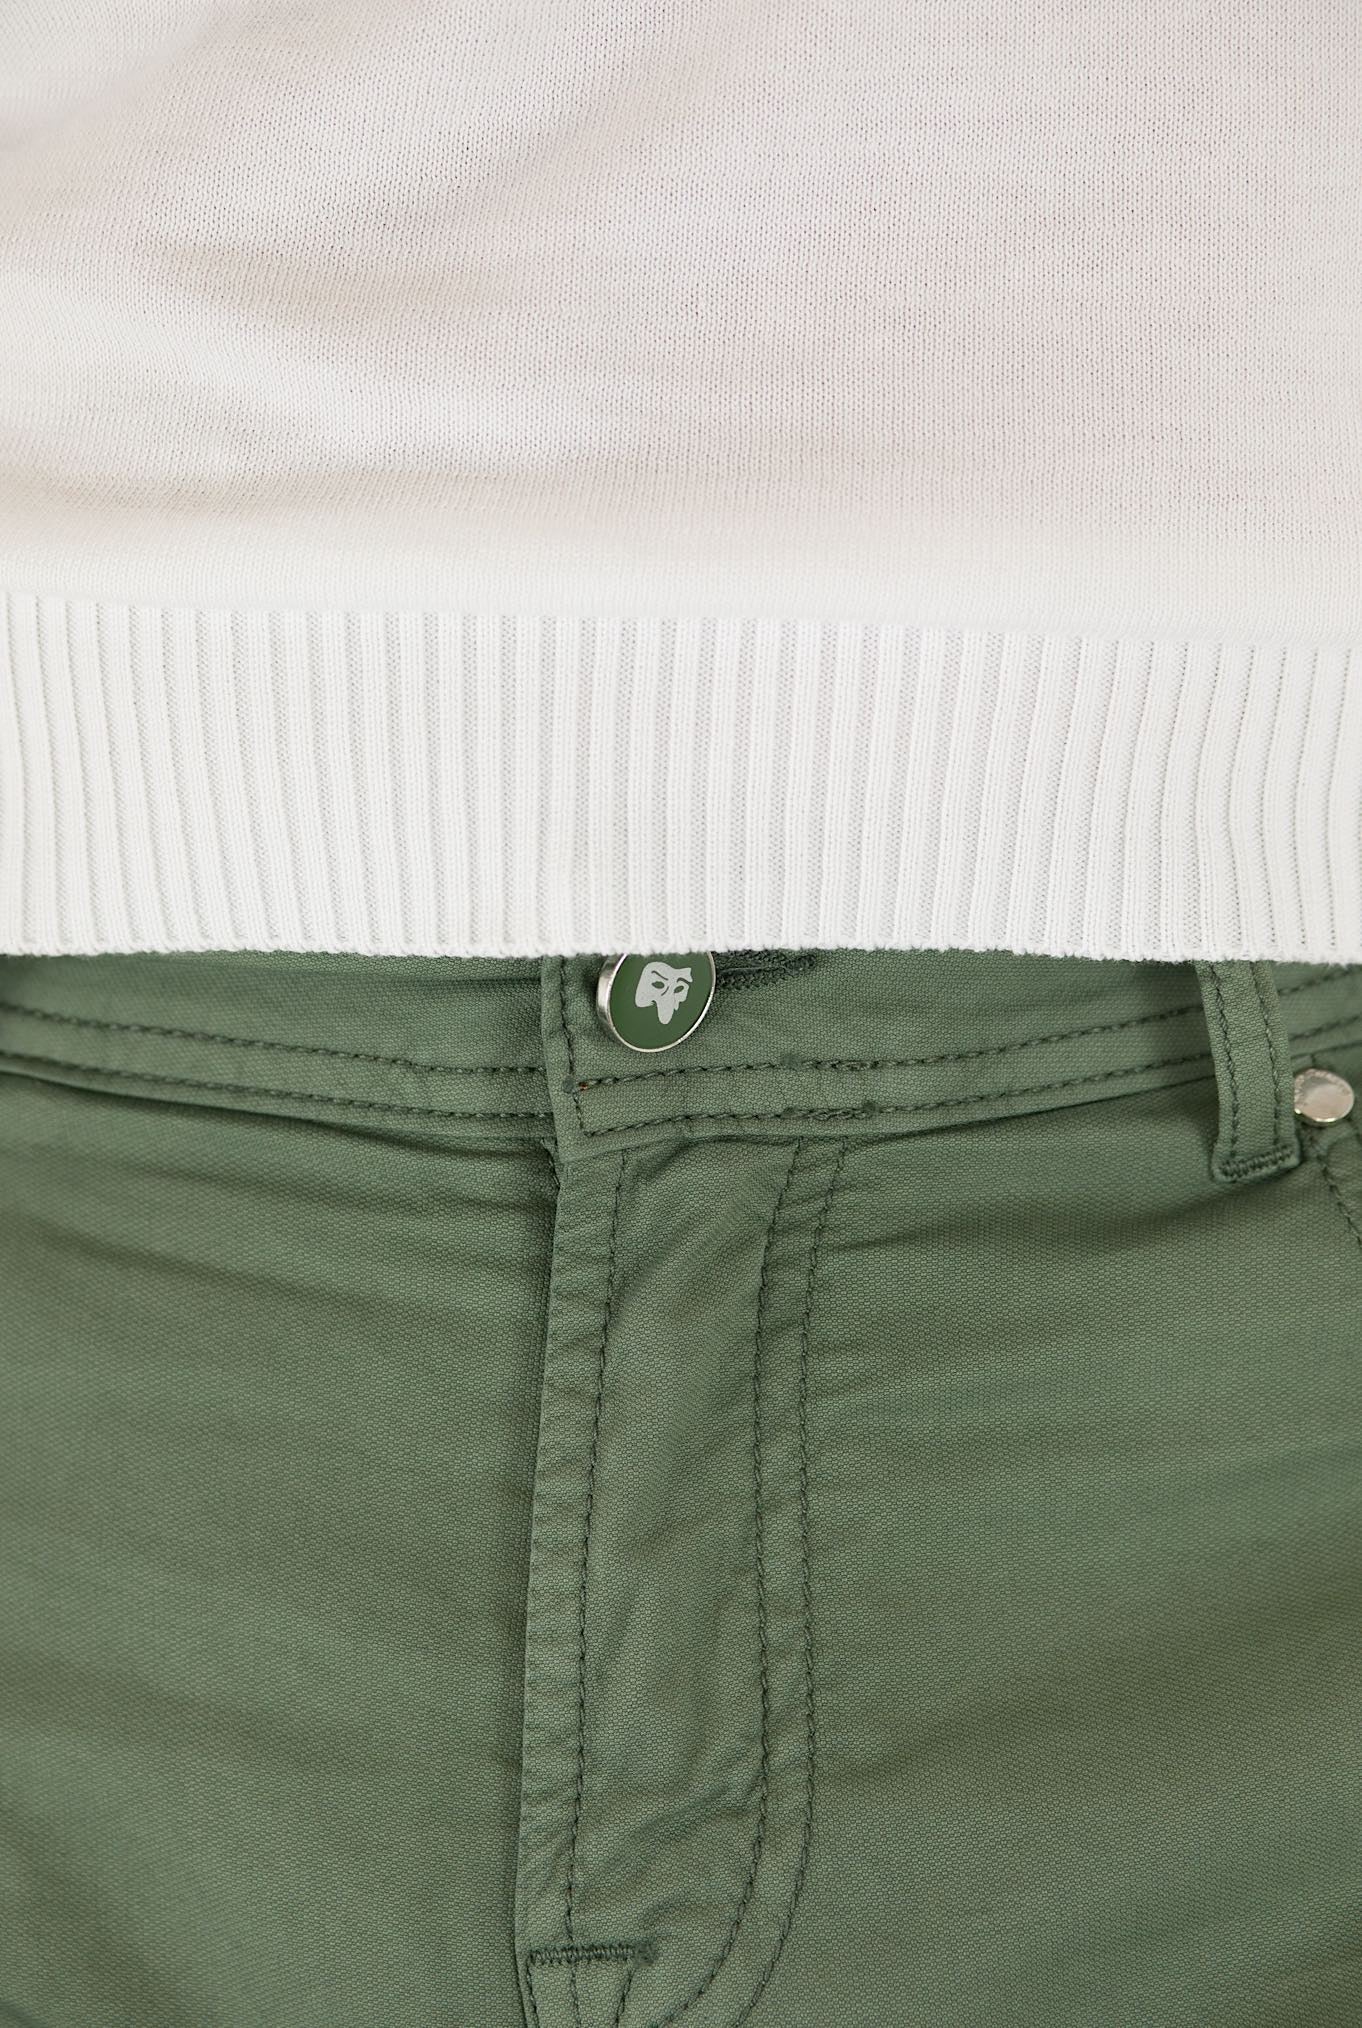 PESCAROLO 5 Pocket Trousers mod. Nerano Cotton Silk Green